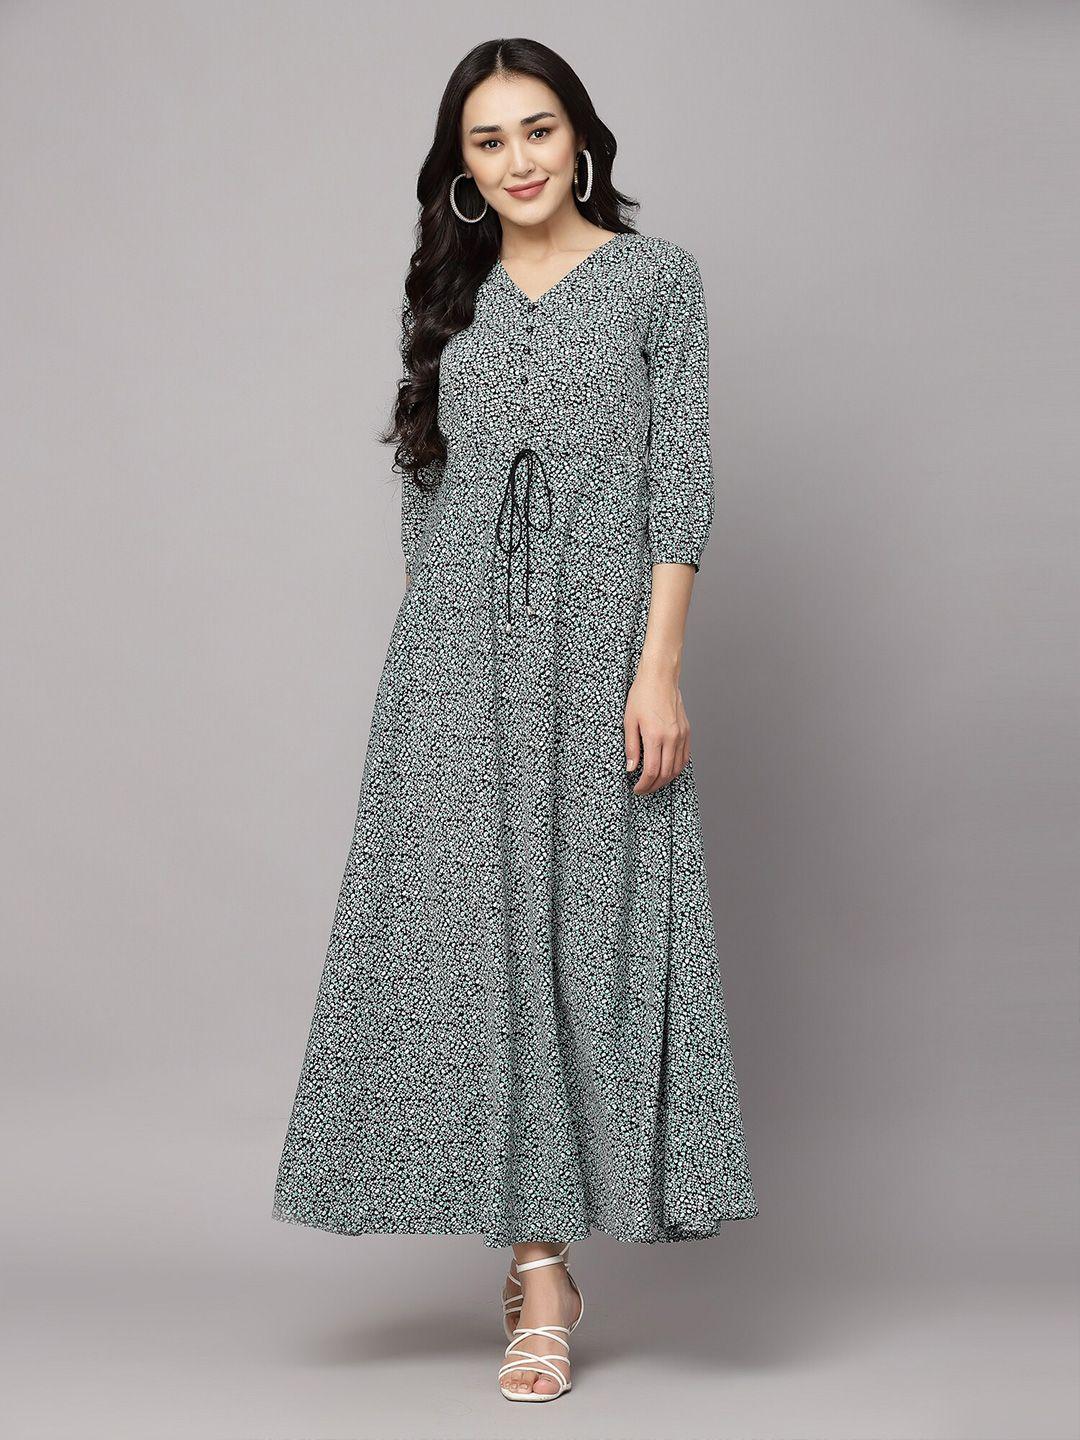 aayu floral printed v-neck a-line maxi dress